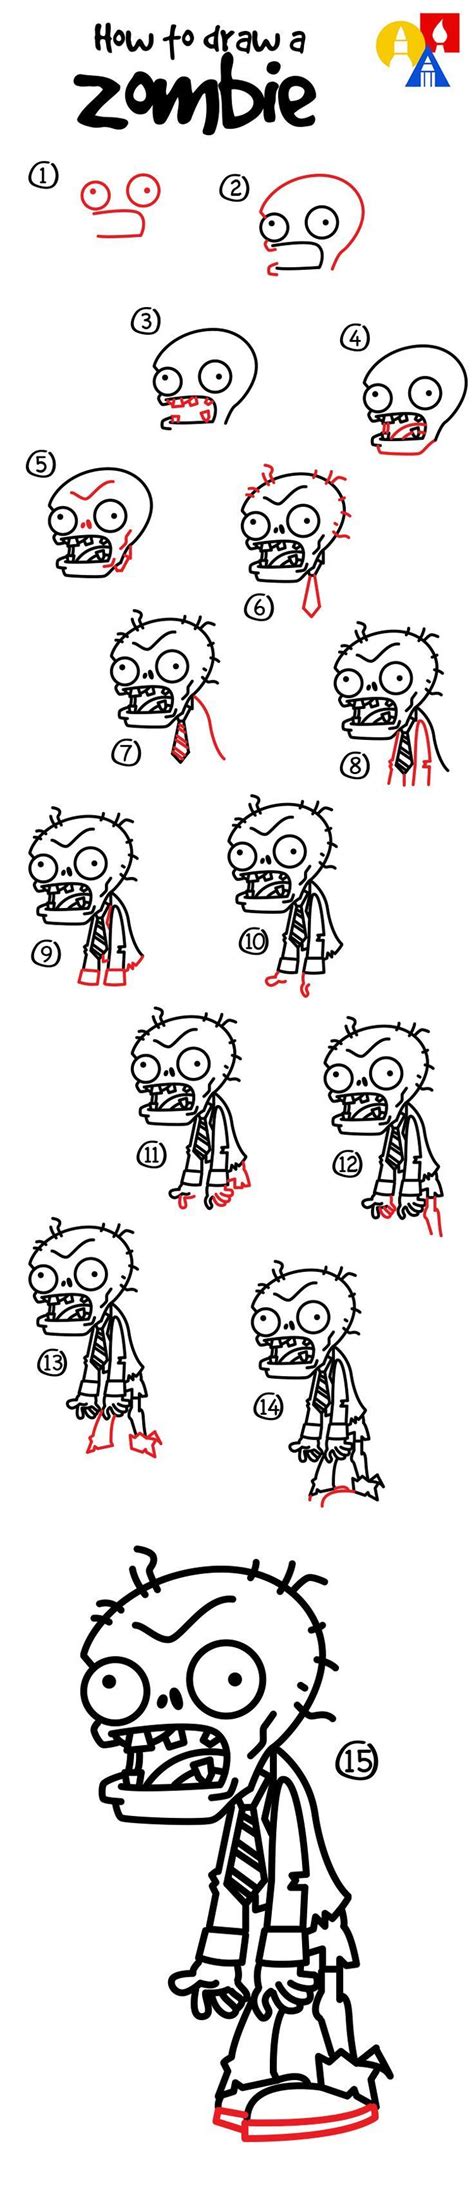 How To Draw A Zombie From Plants Vs Zombies Como Aprender A Dibujar